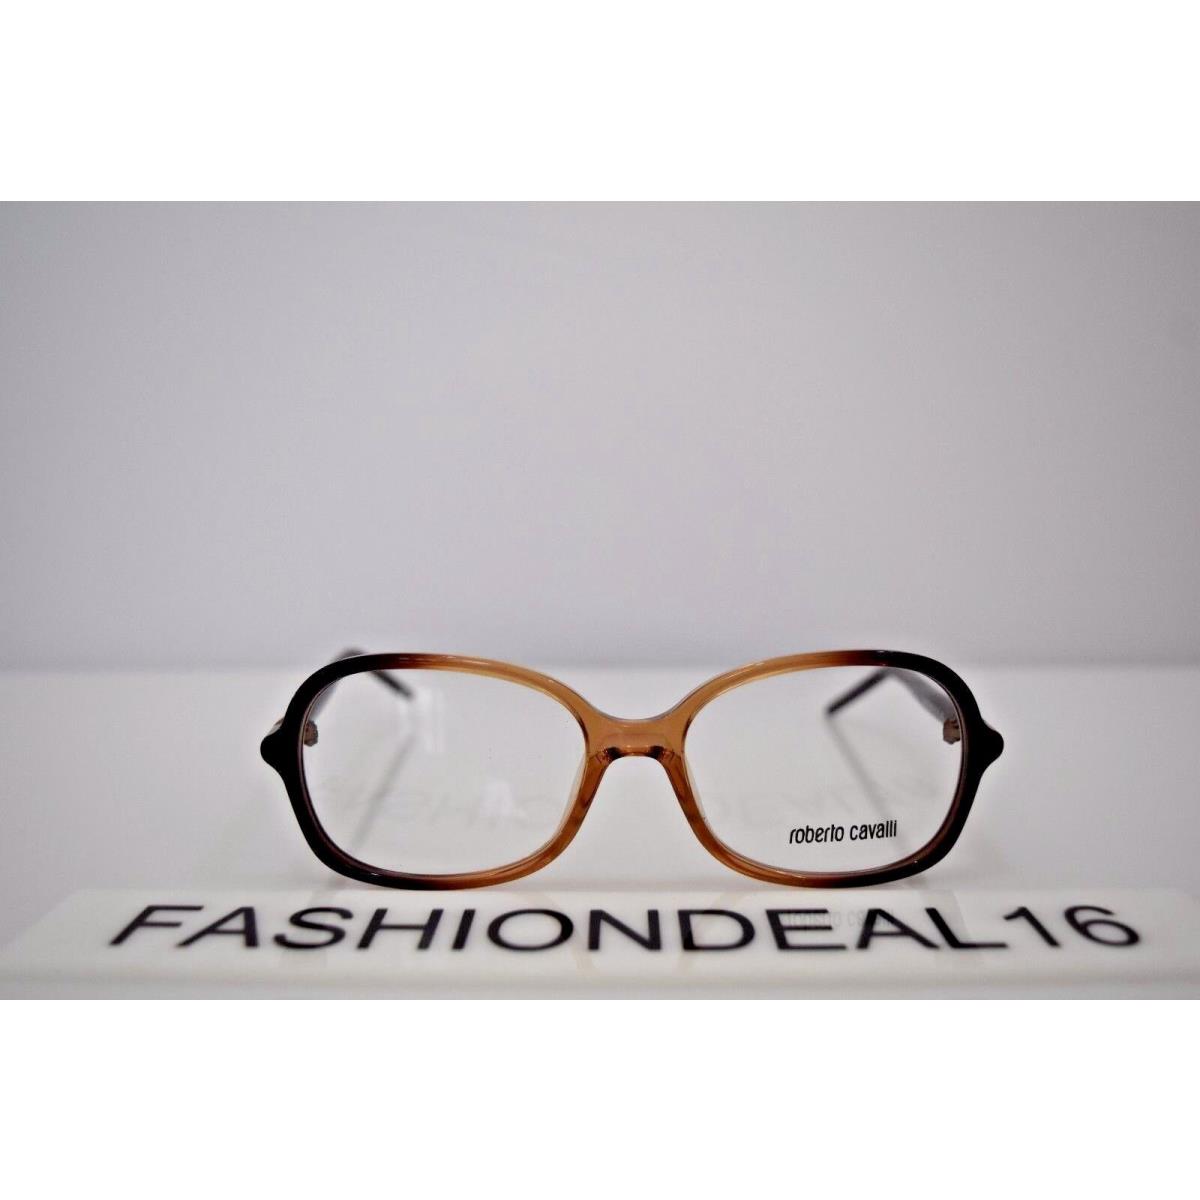 Roberto Cavalli eyeglasses  - Brown/Beige Translucent Frame 1